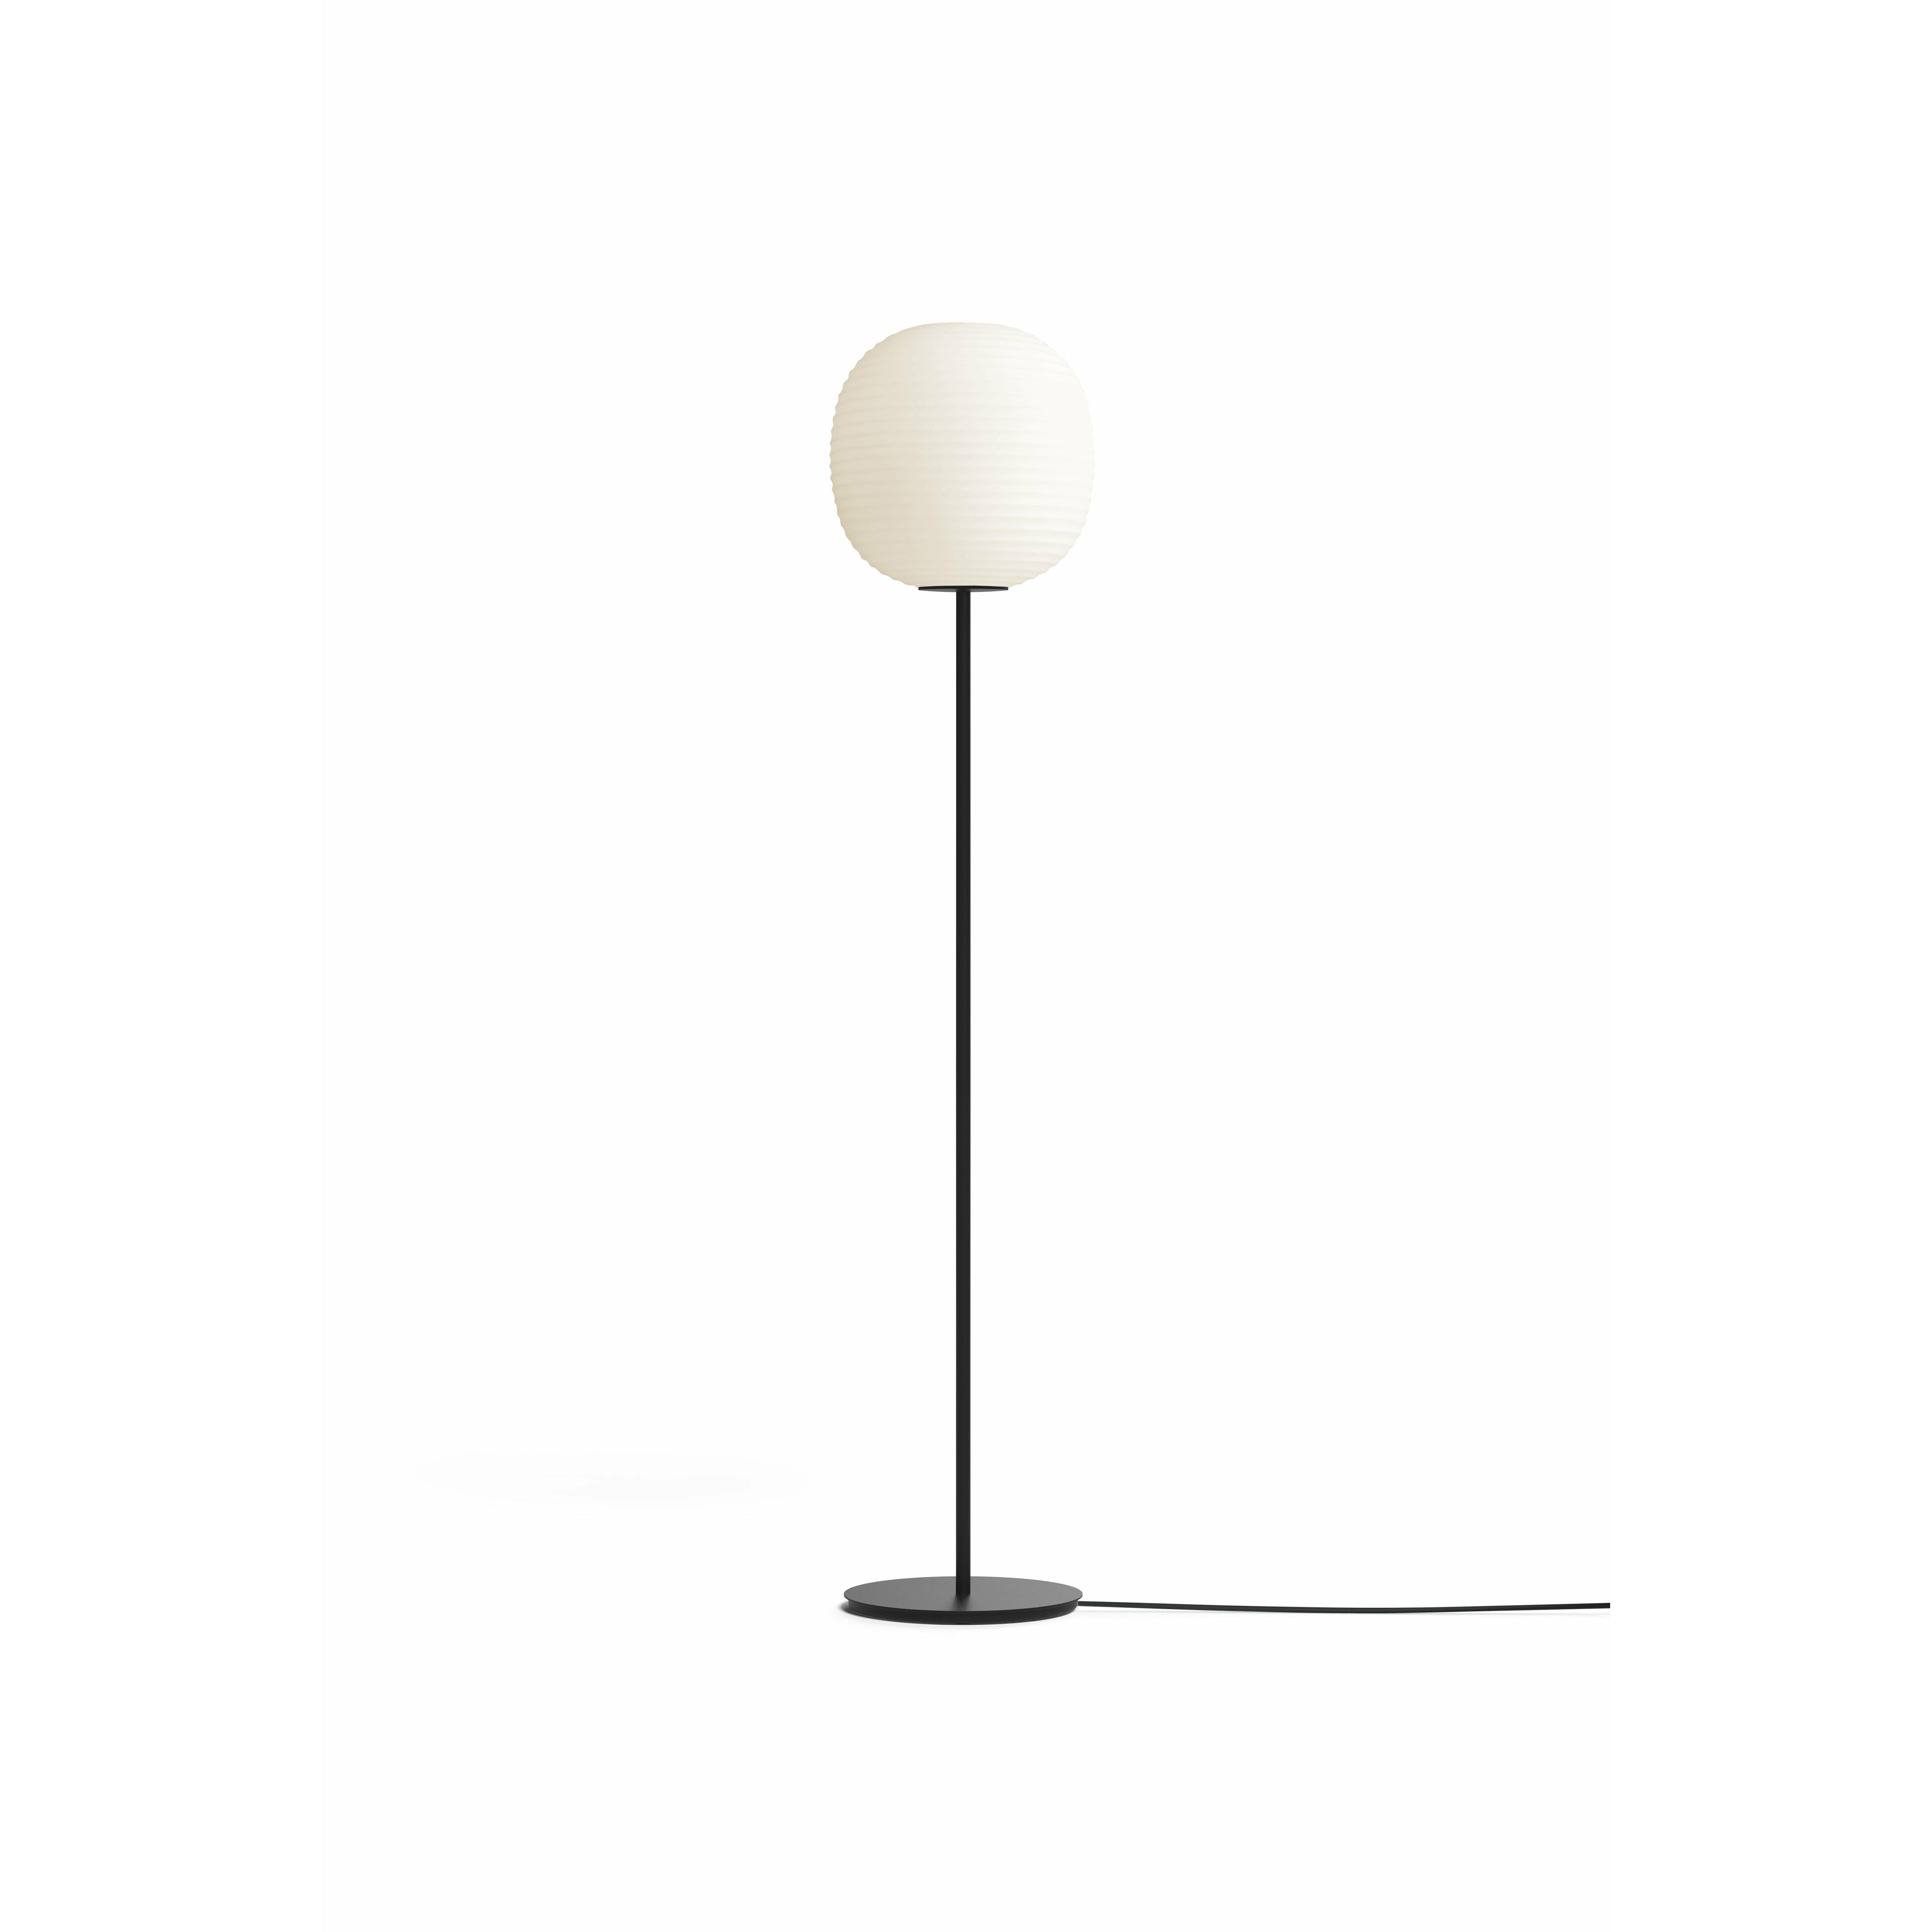 Nuove opere Lampada per pavimenti lanterna, Ø30 cm